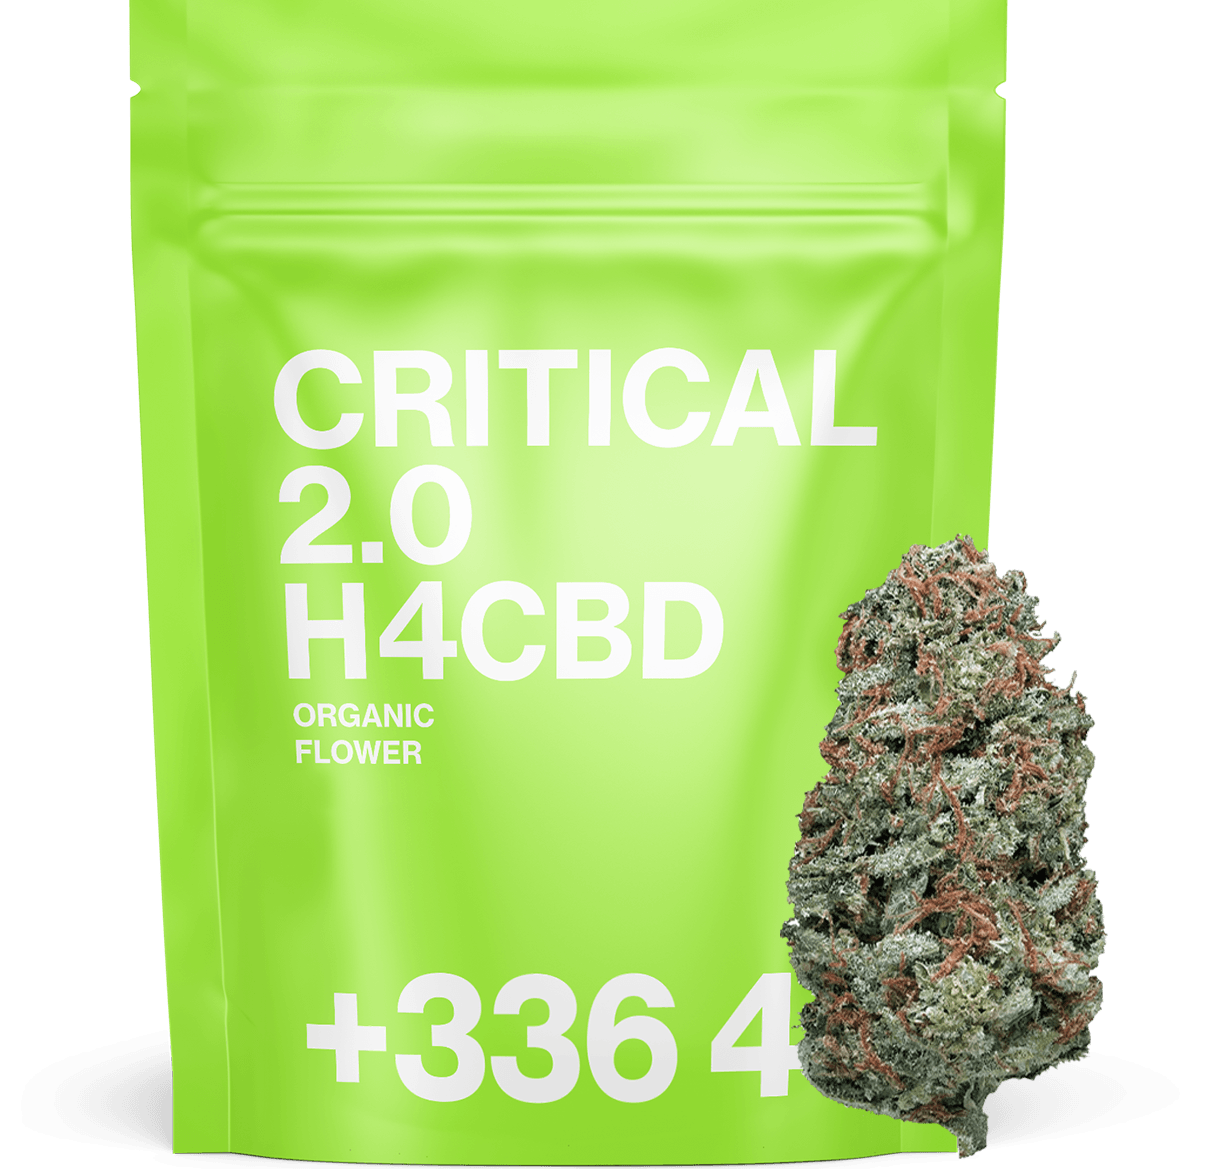 Critical 2.0 - Fleur H4CBD by Tealer420